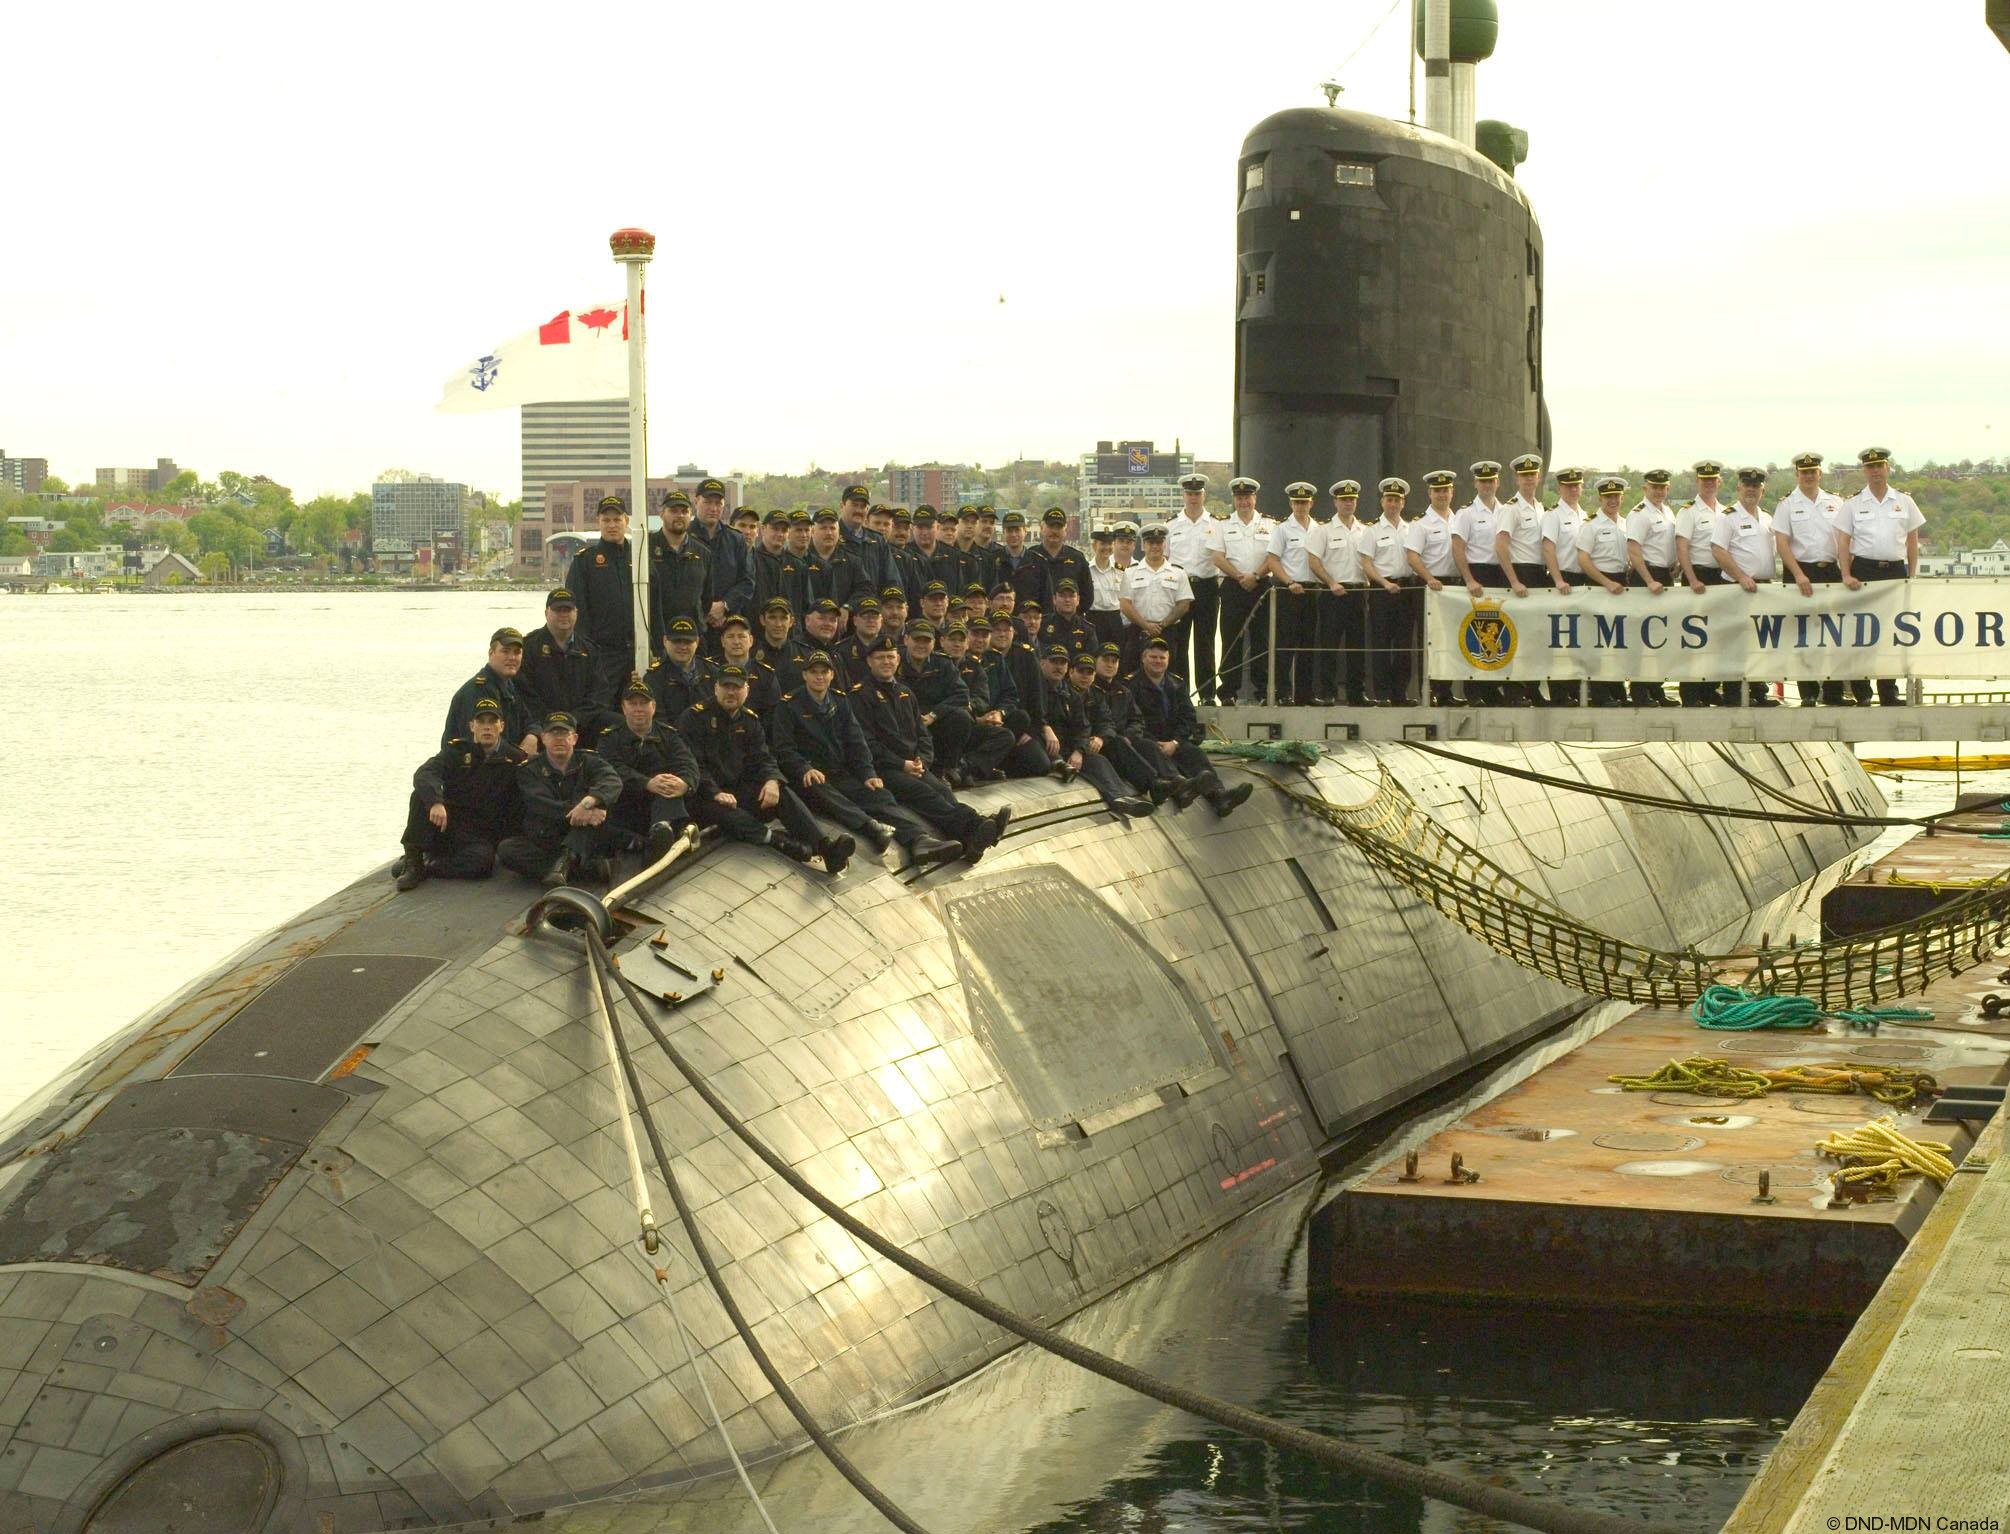 ssk-877 hmcs windsor victoria upholder class attack submarine hunter killer ncsm royal canadian navy 22